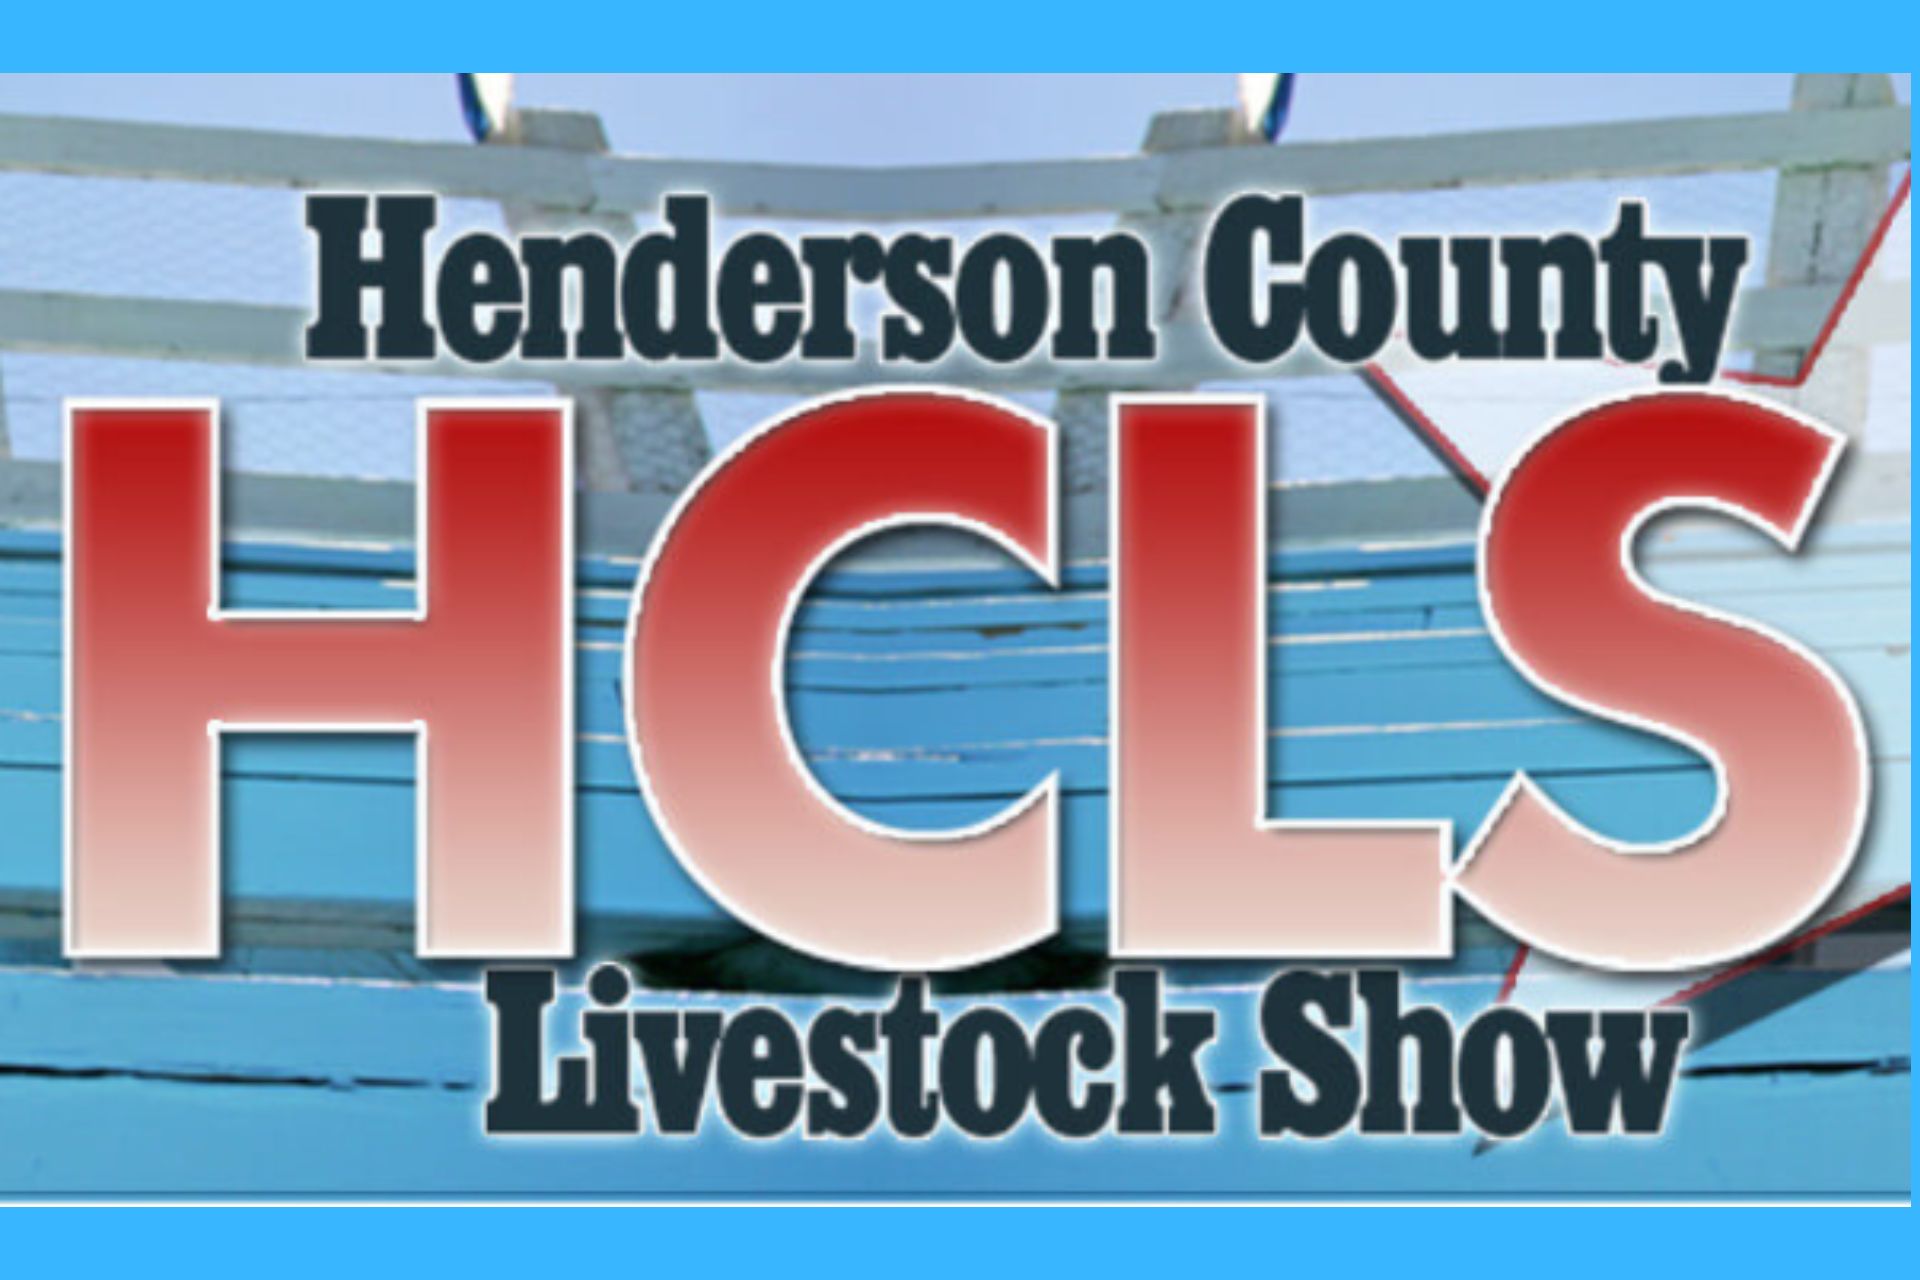 Henderson County Livestock Show